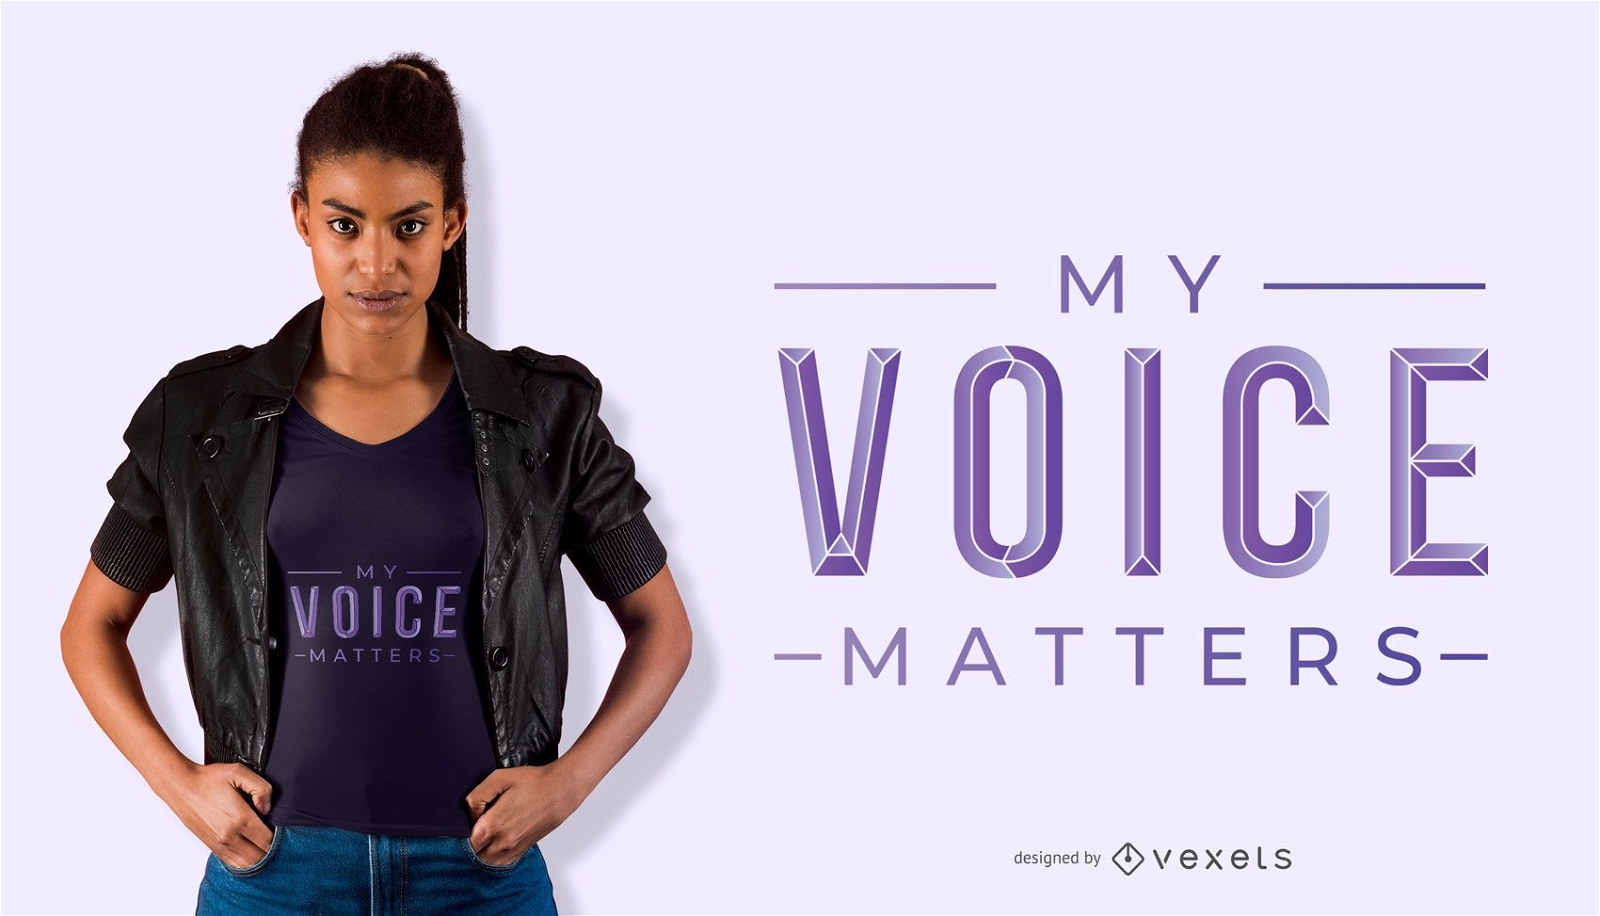 My voice matters t-shirt design